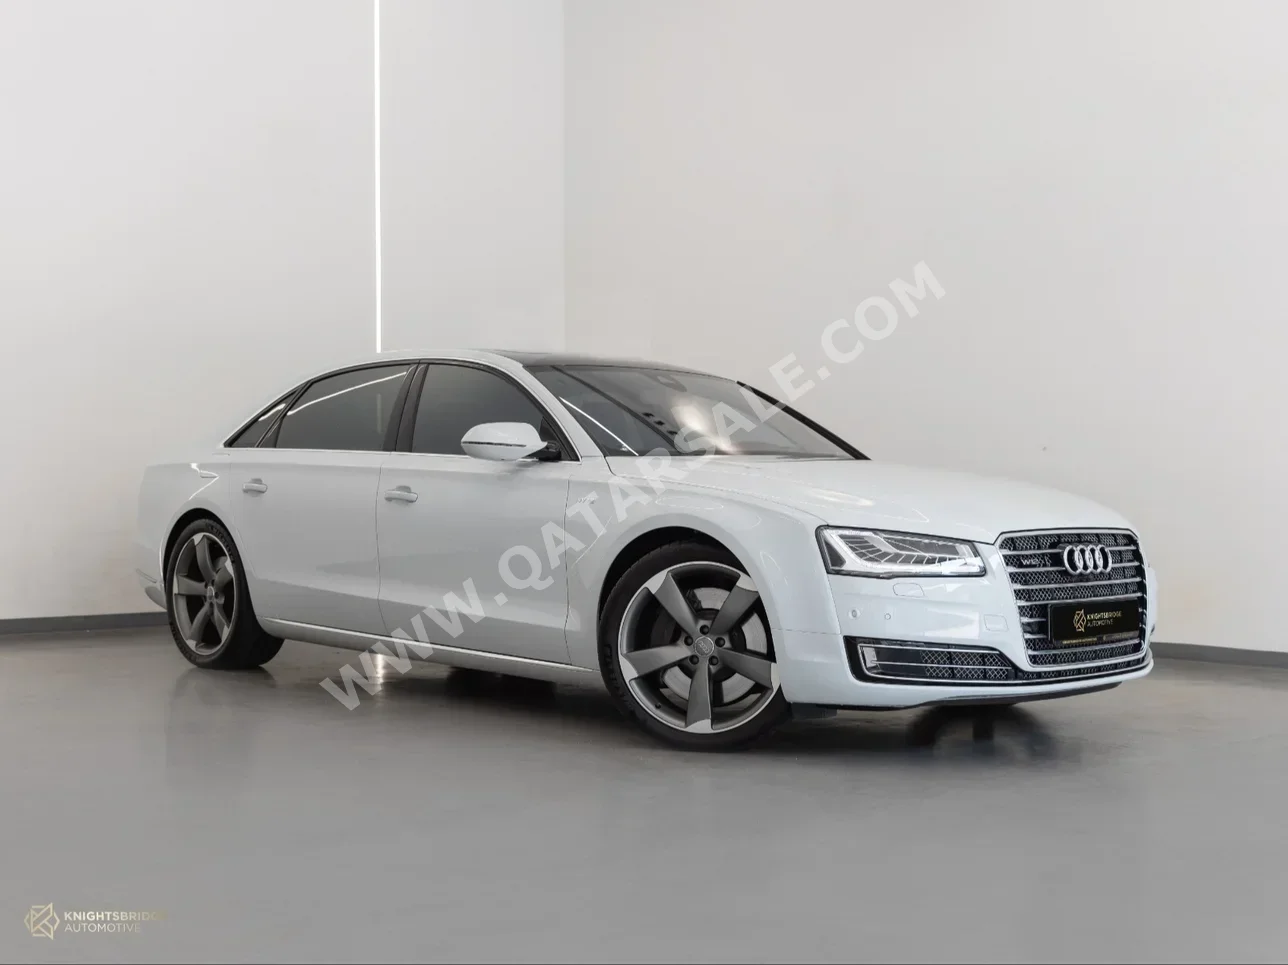 Audi  A8  W12 Quattro  2015  Automatic  24,000 Km  12 Cylinder  All Wheel Drive (AWD)  Sedan  White